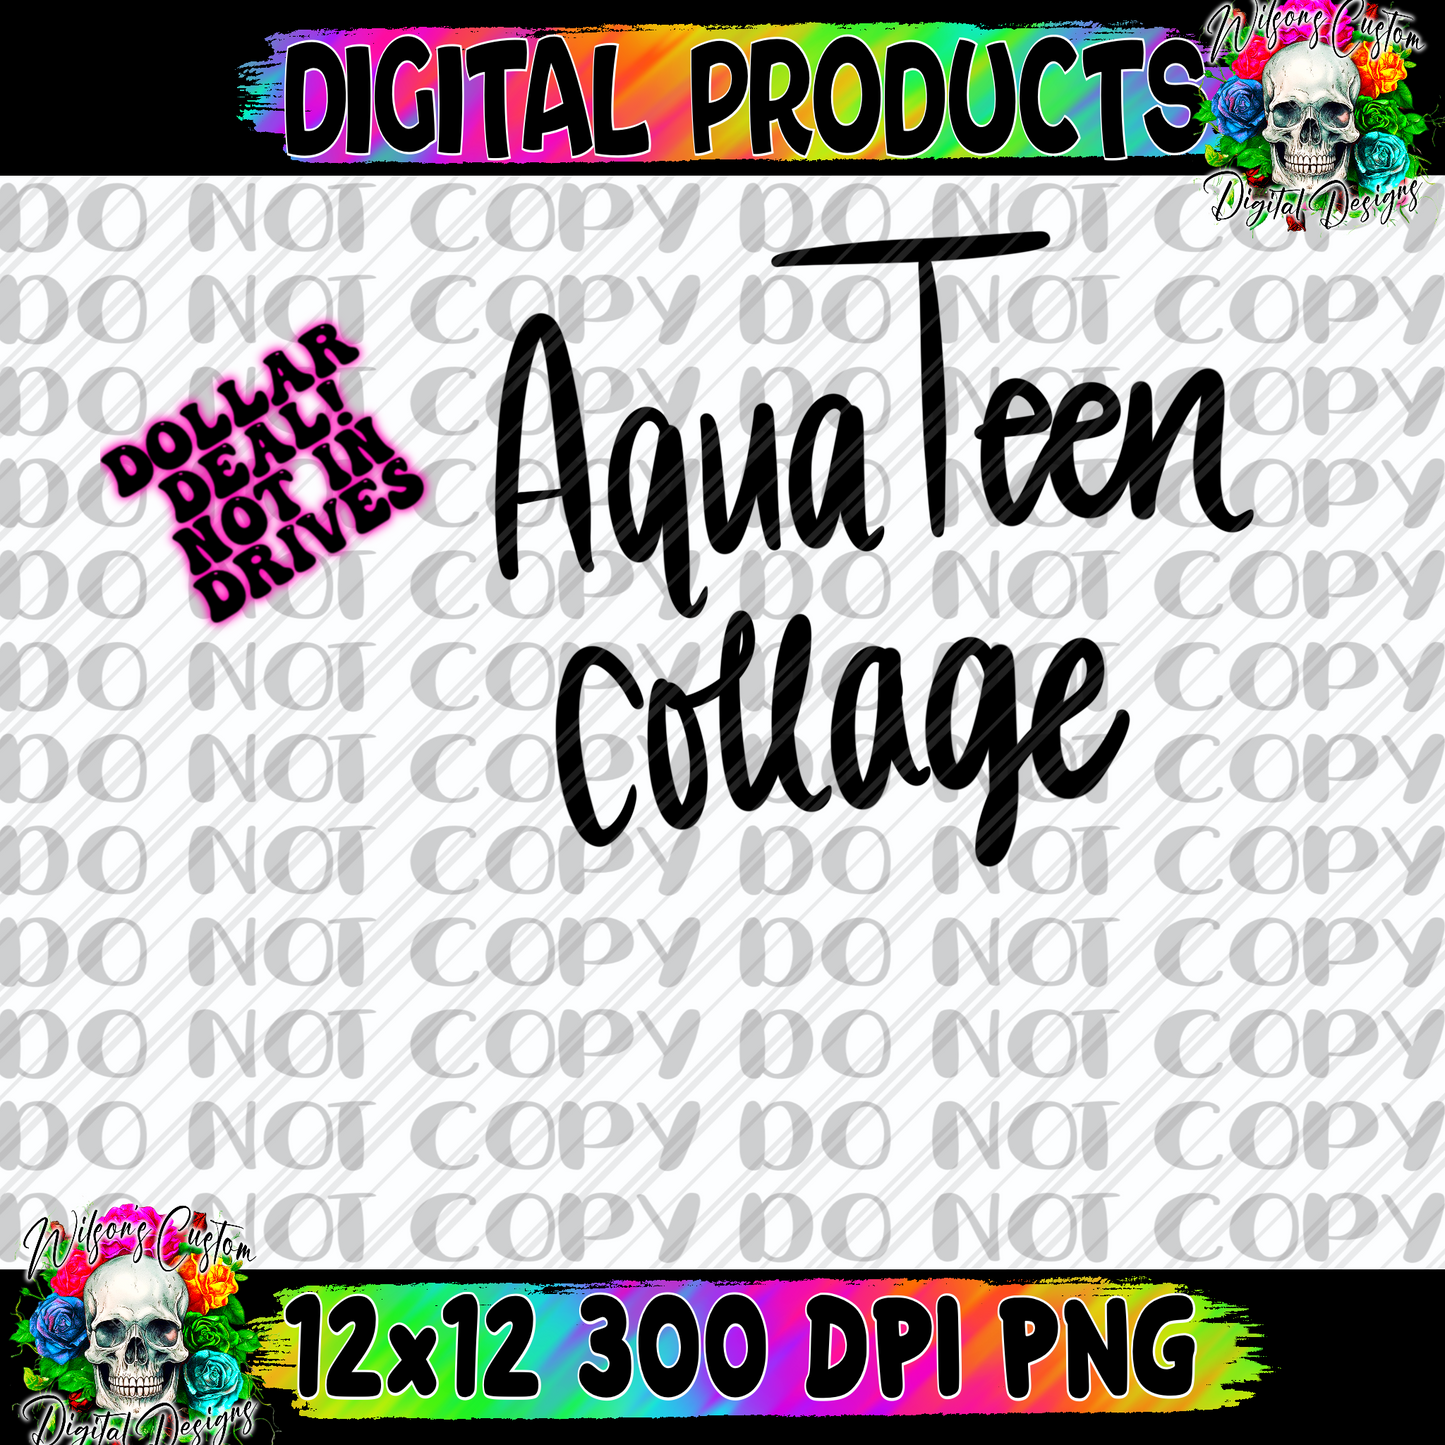 Aqua teen collage